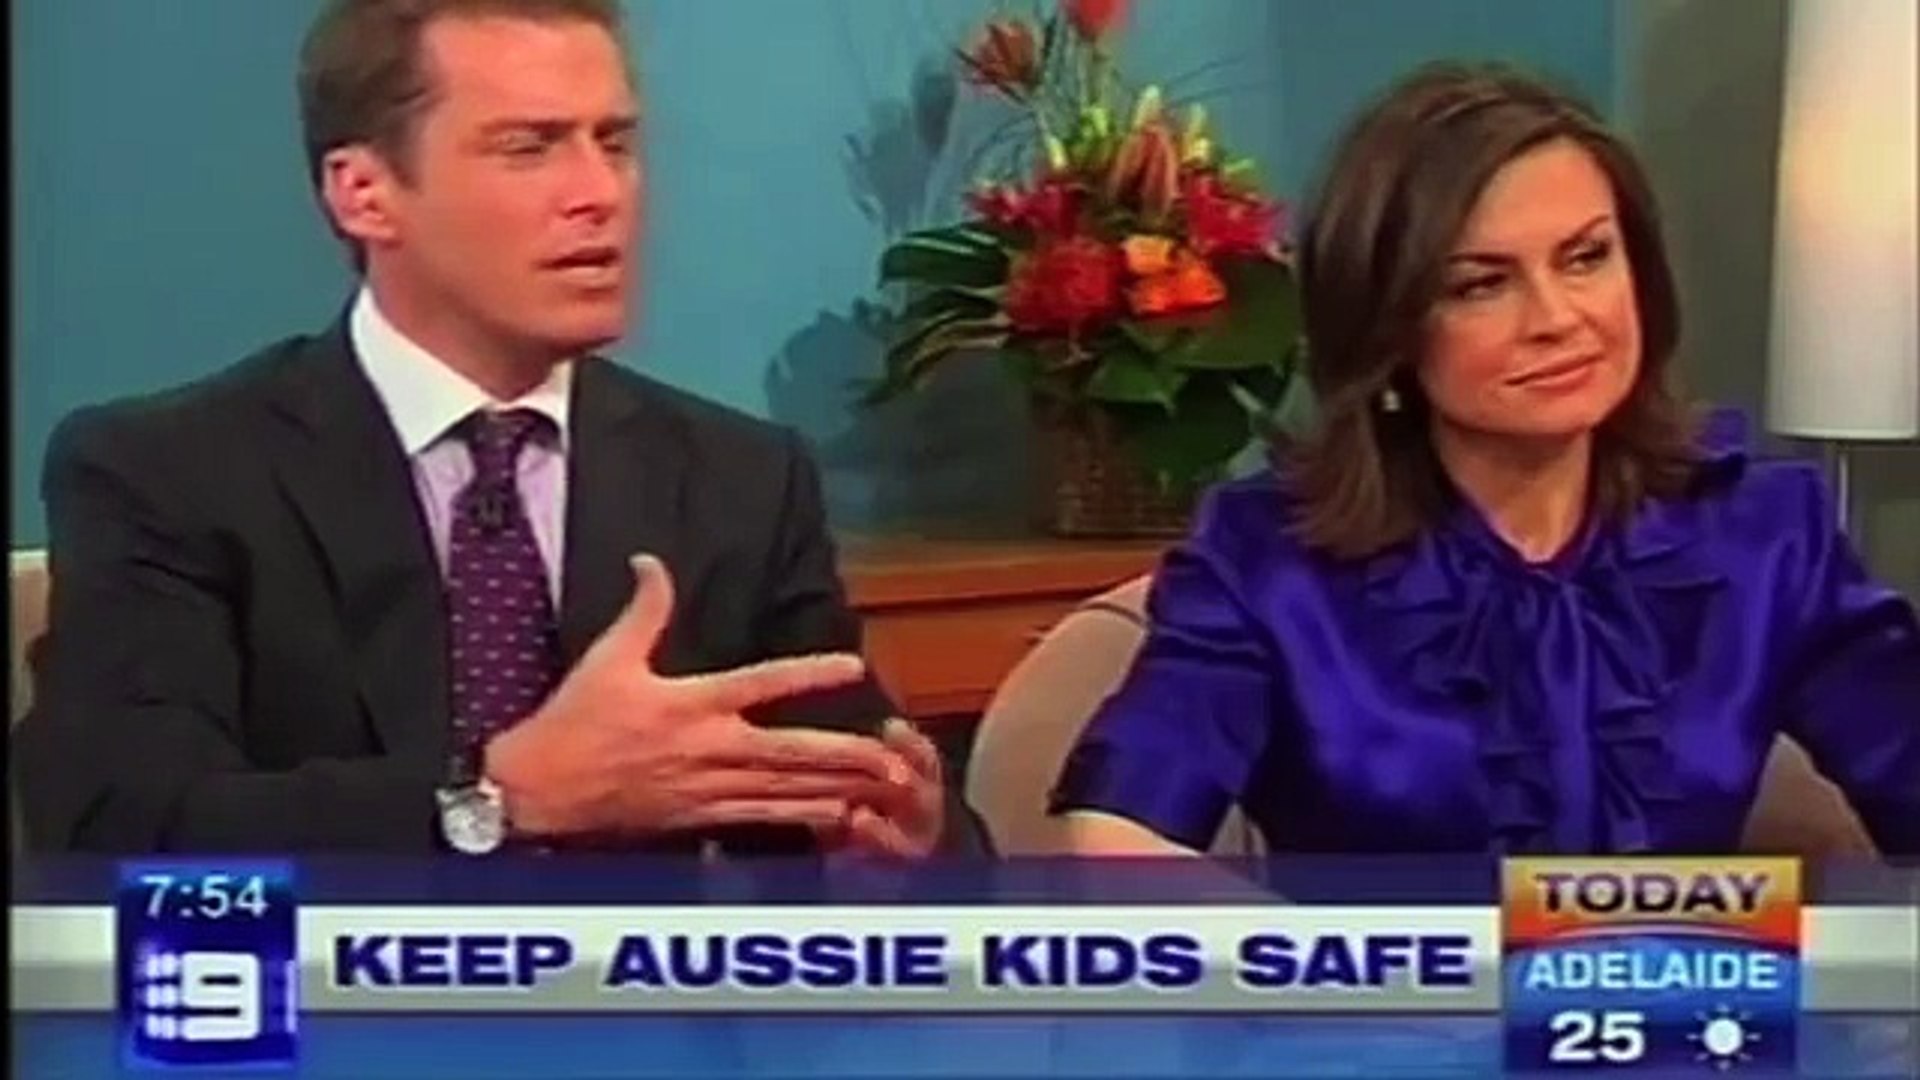 Life Education, 'Keep Aussie Kids Safe'